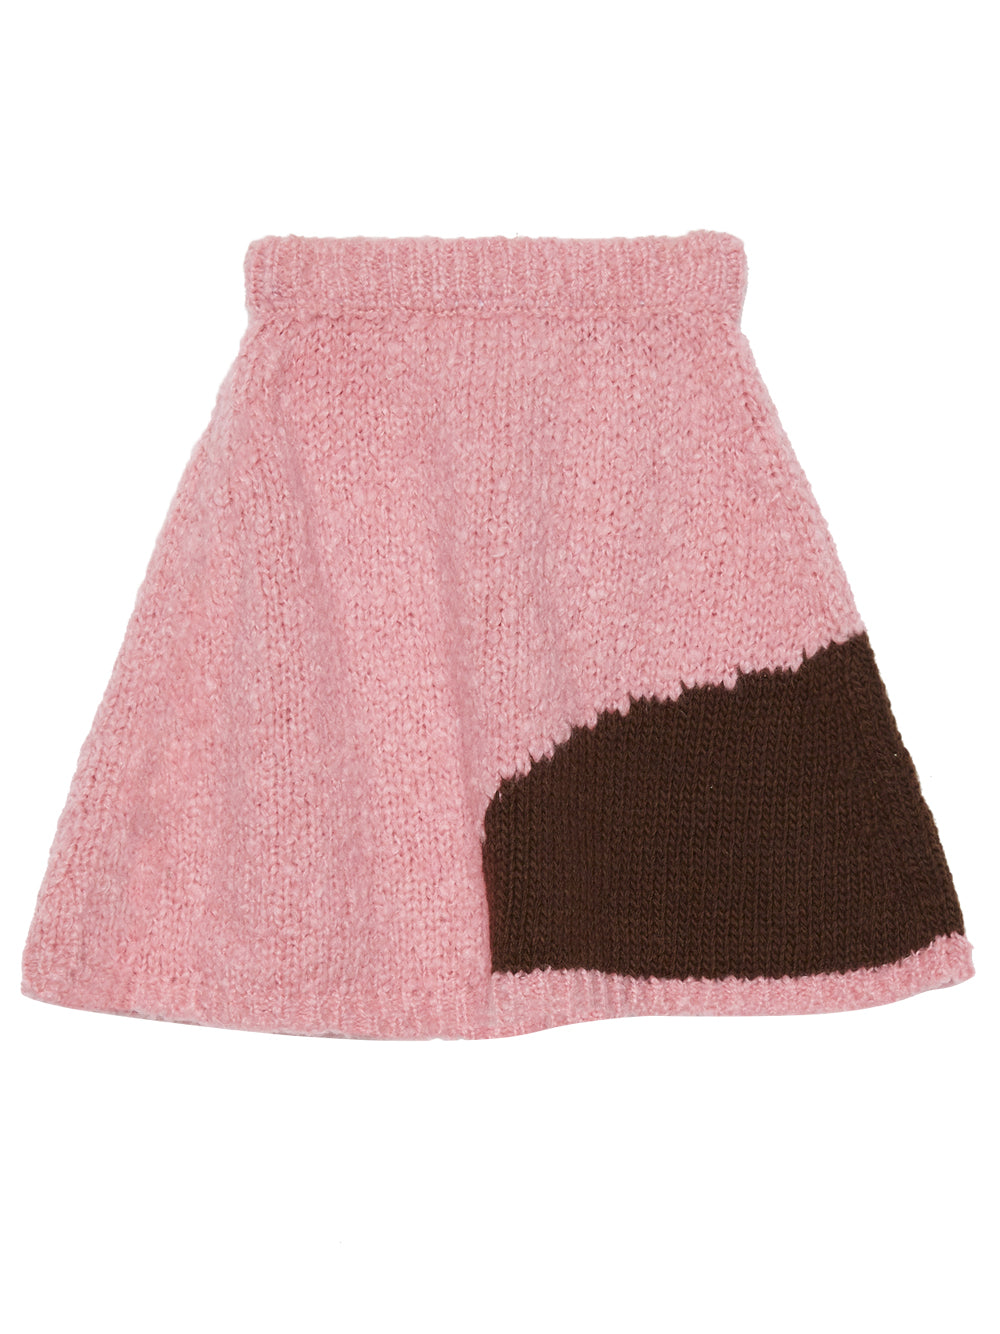 Pink Dot Skirt